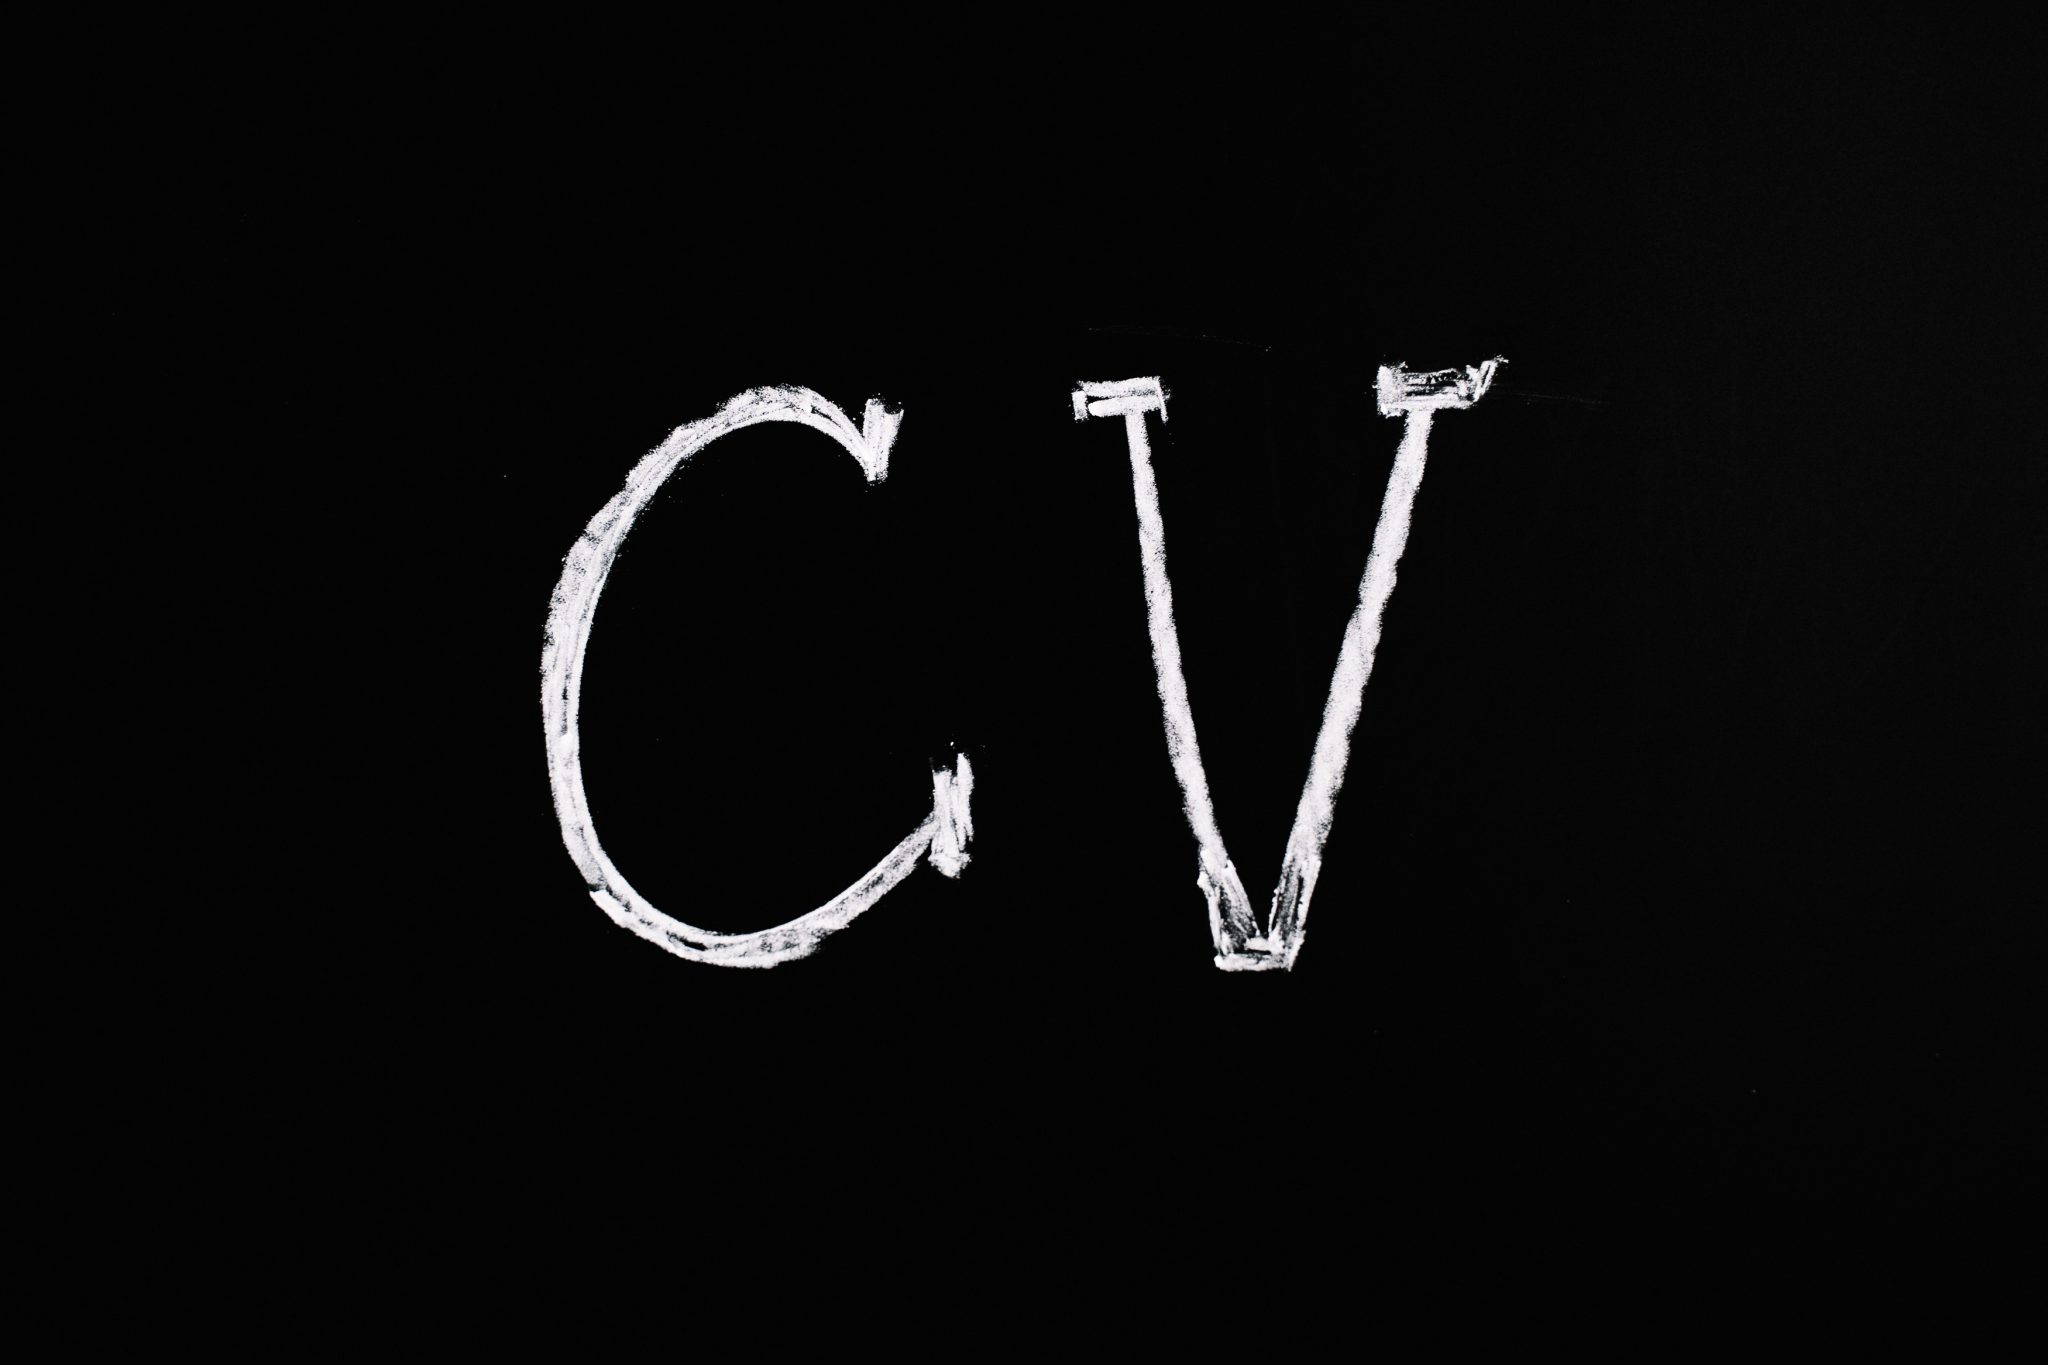 Blackboard with word 'CV'